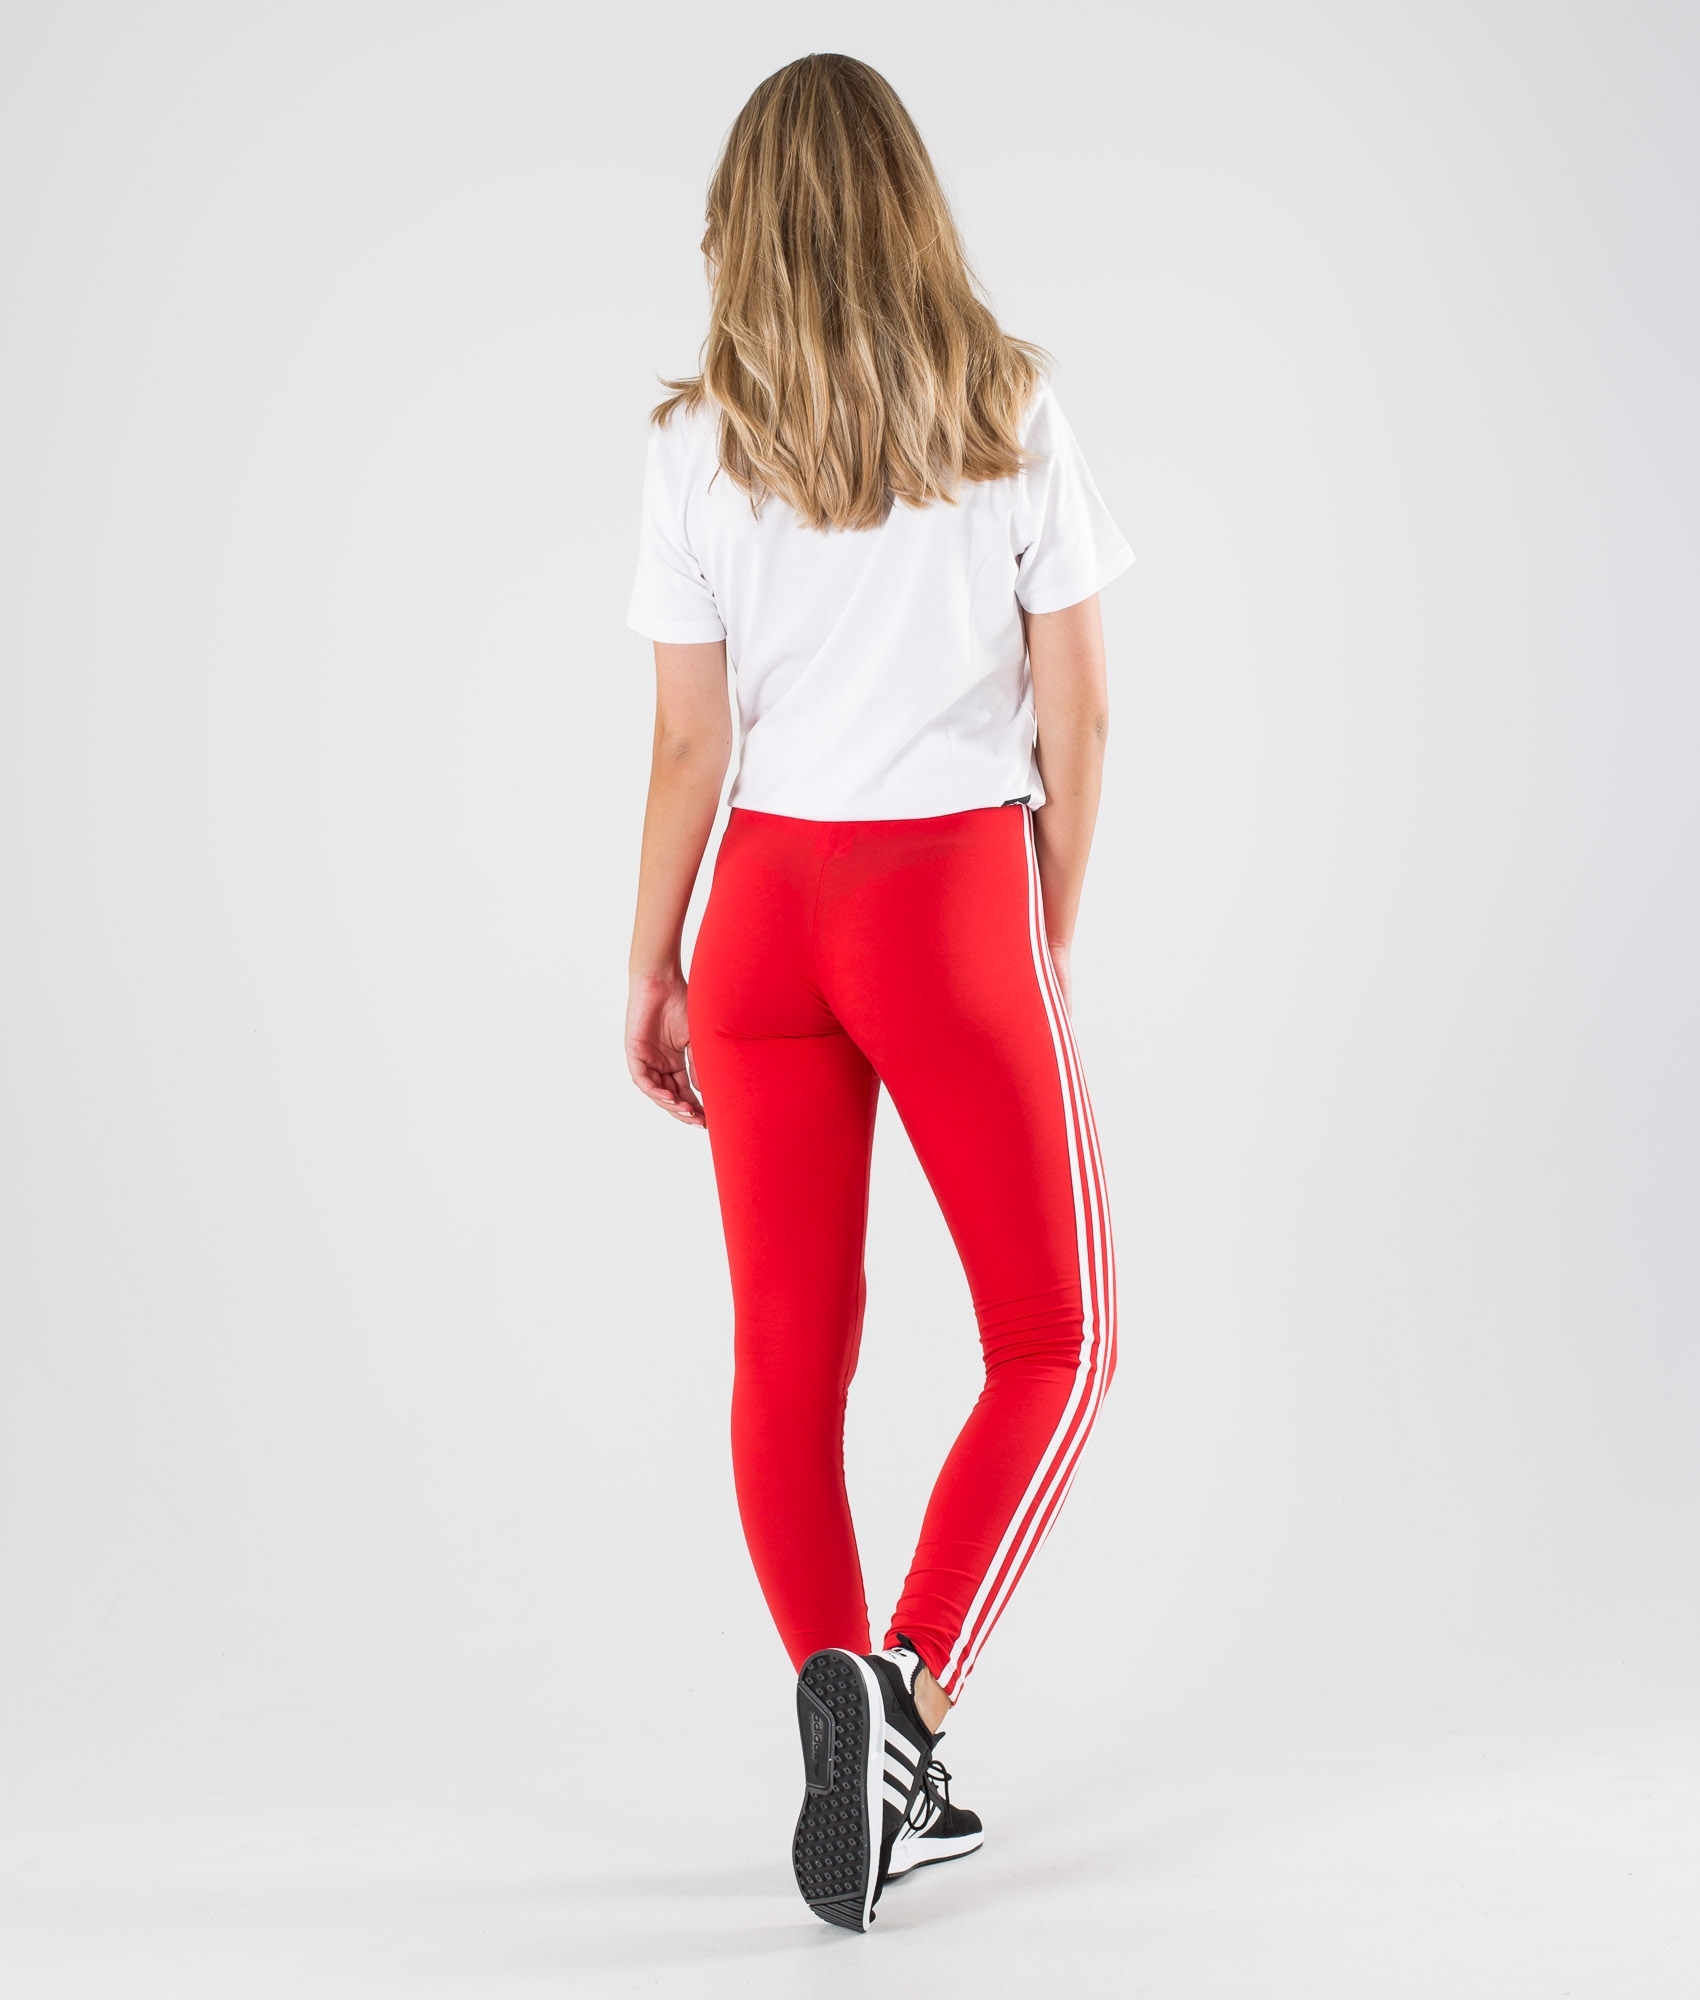 adidas 3 stripe leggings red